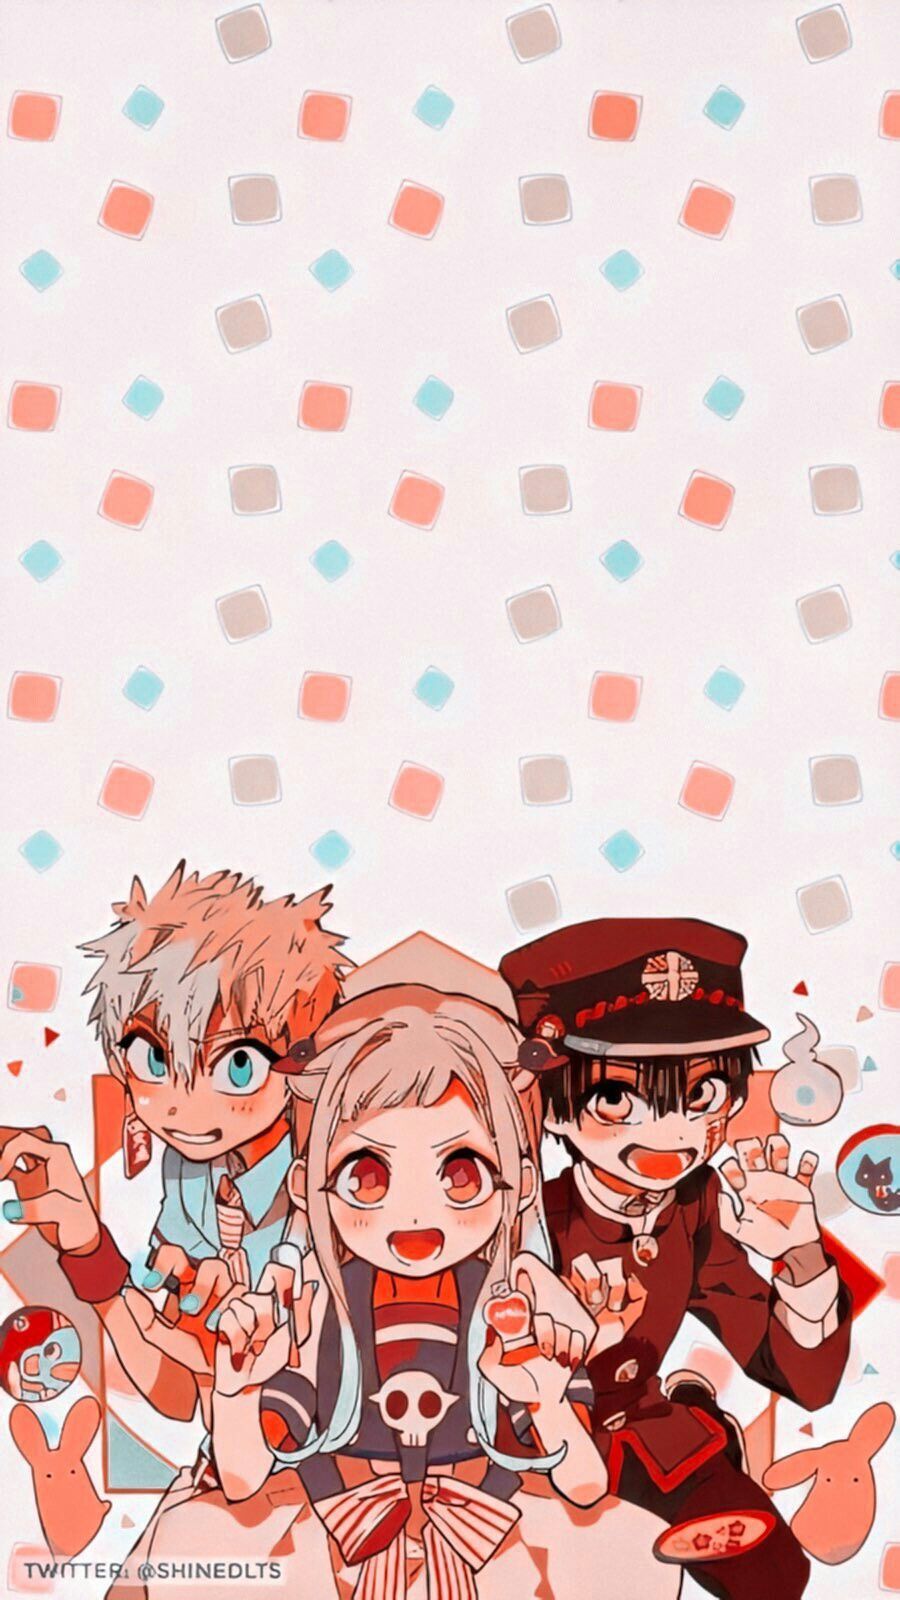 Anime wallpaper, Anime, Anime wallpaper iphone